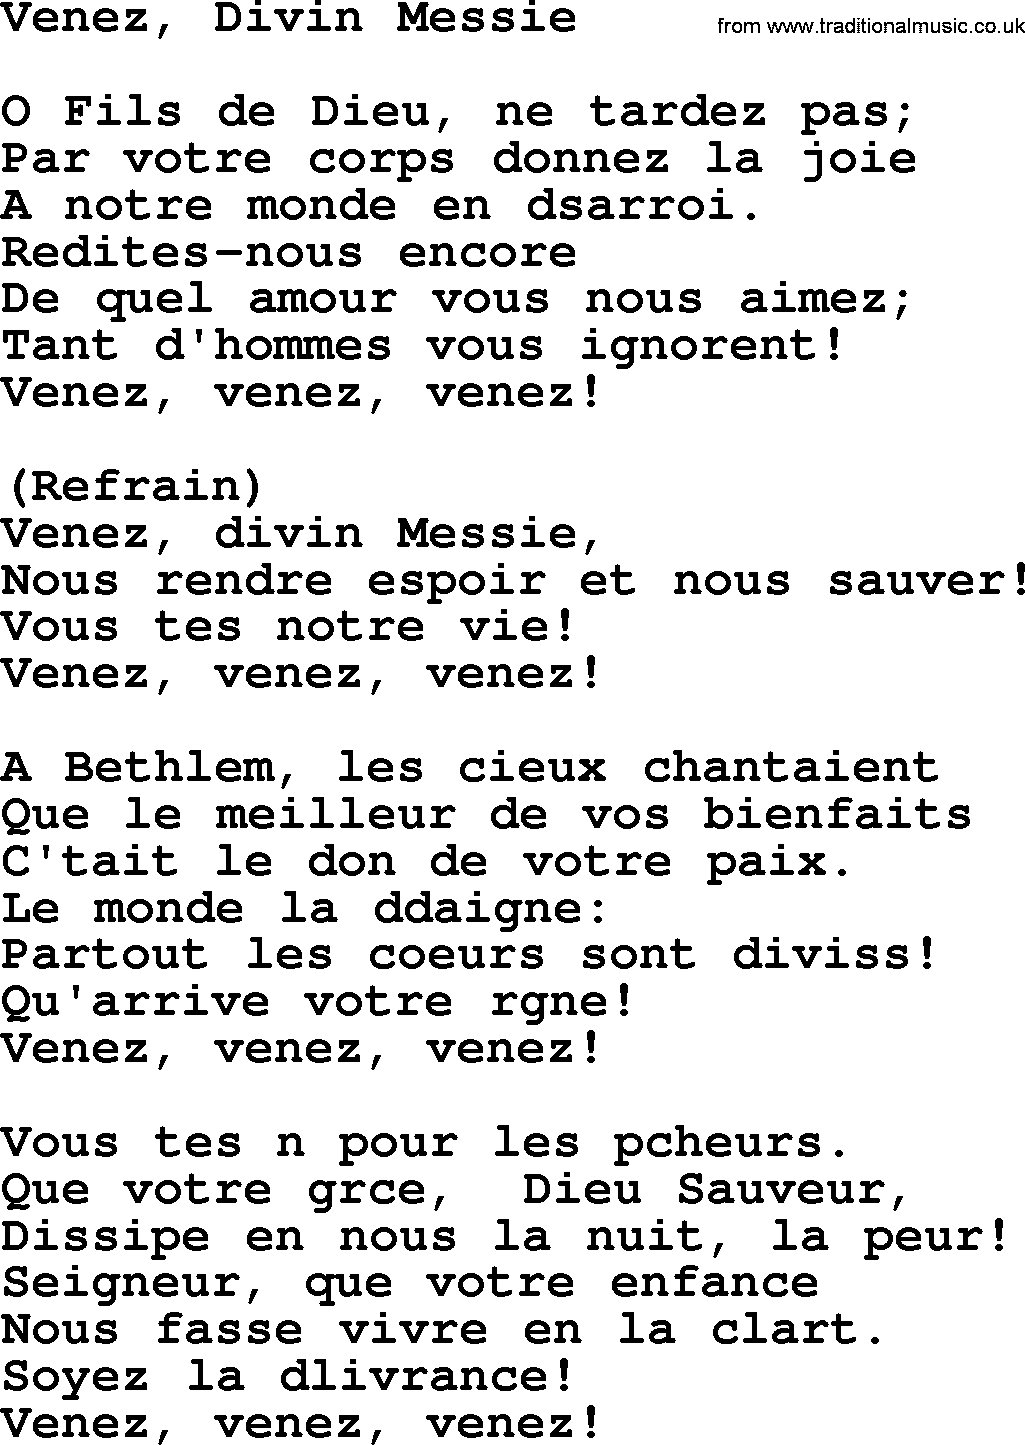 Catholic Hymn: Venez, Divin Messie lyrics with PDF